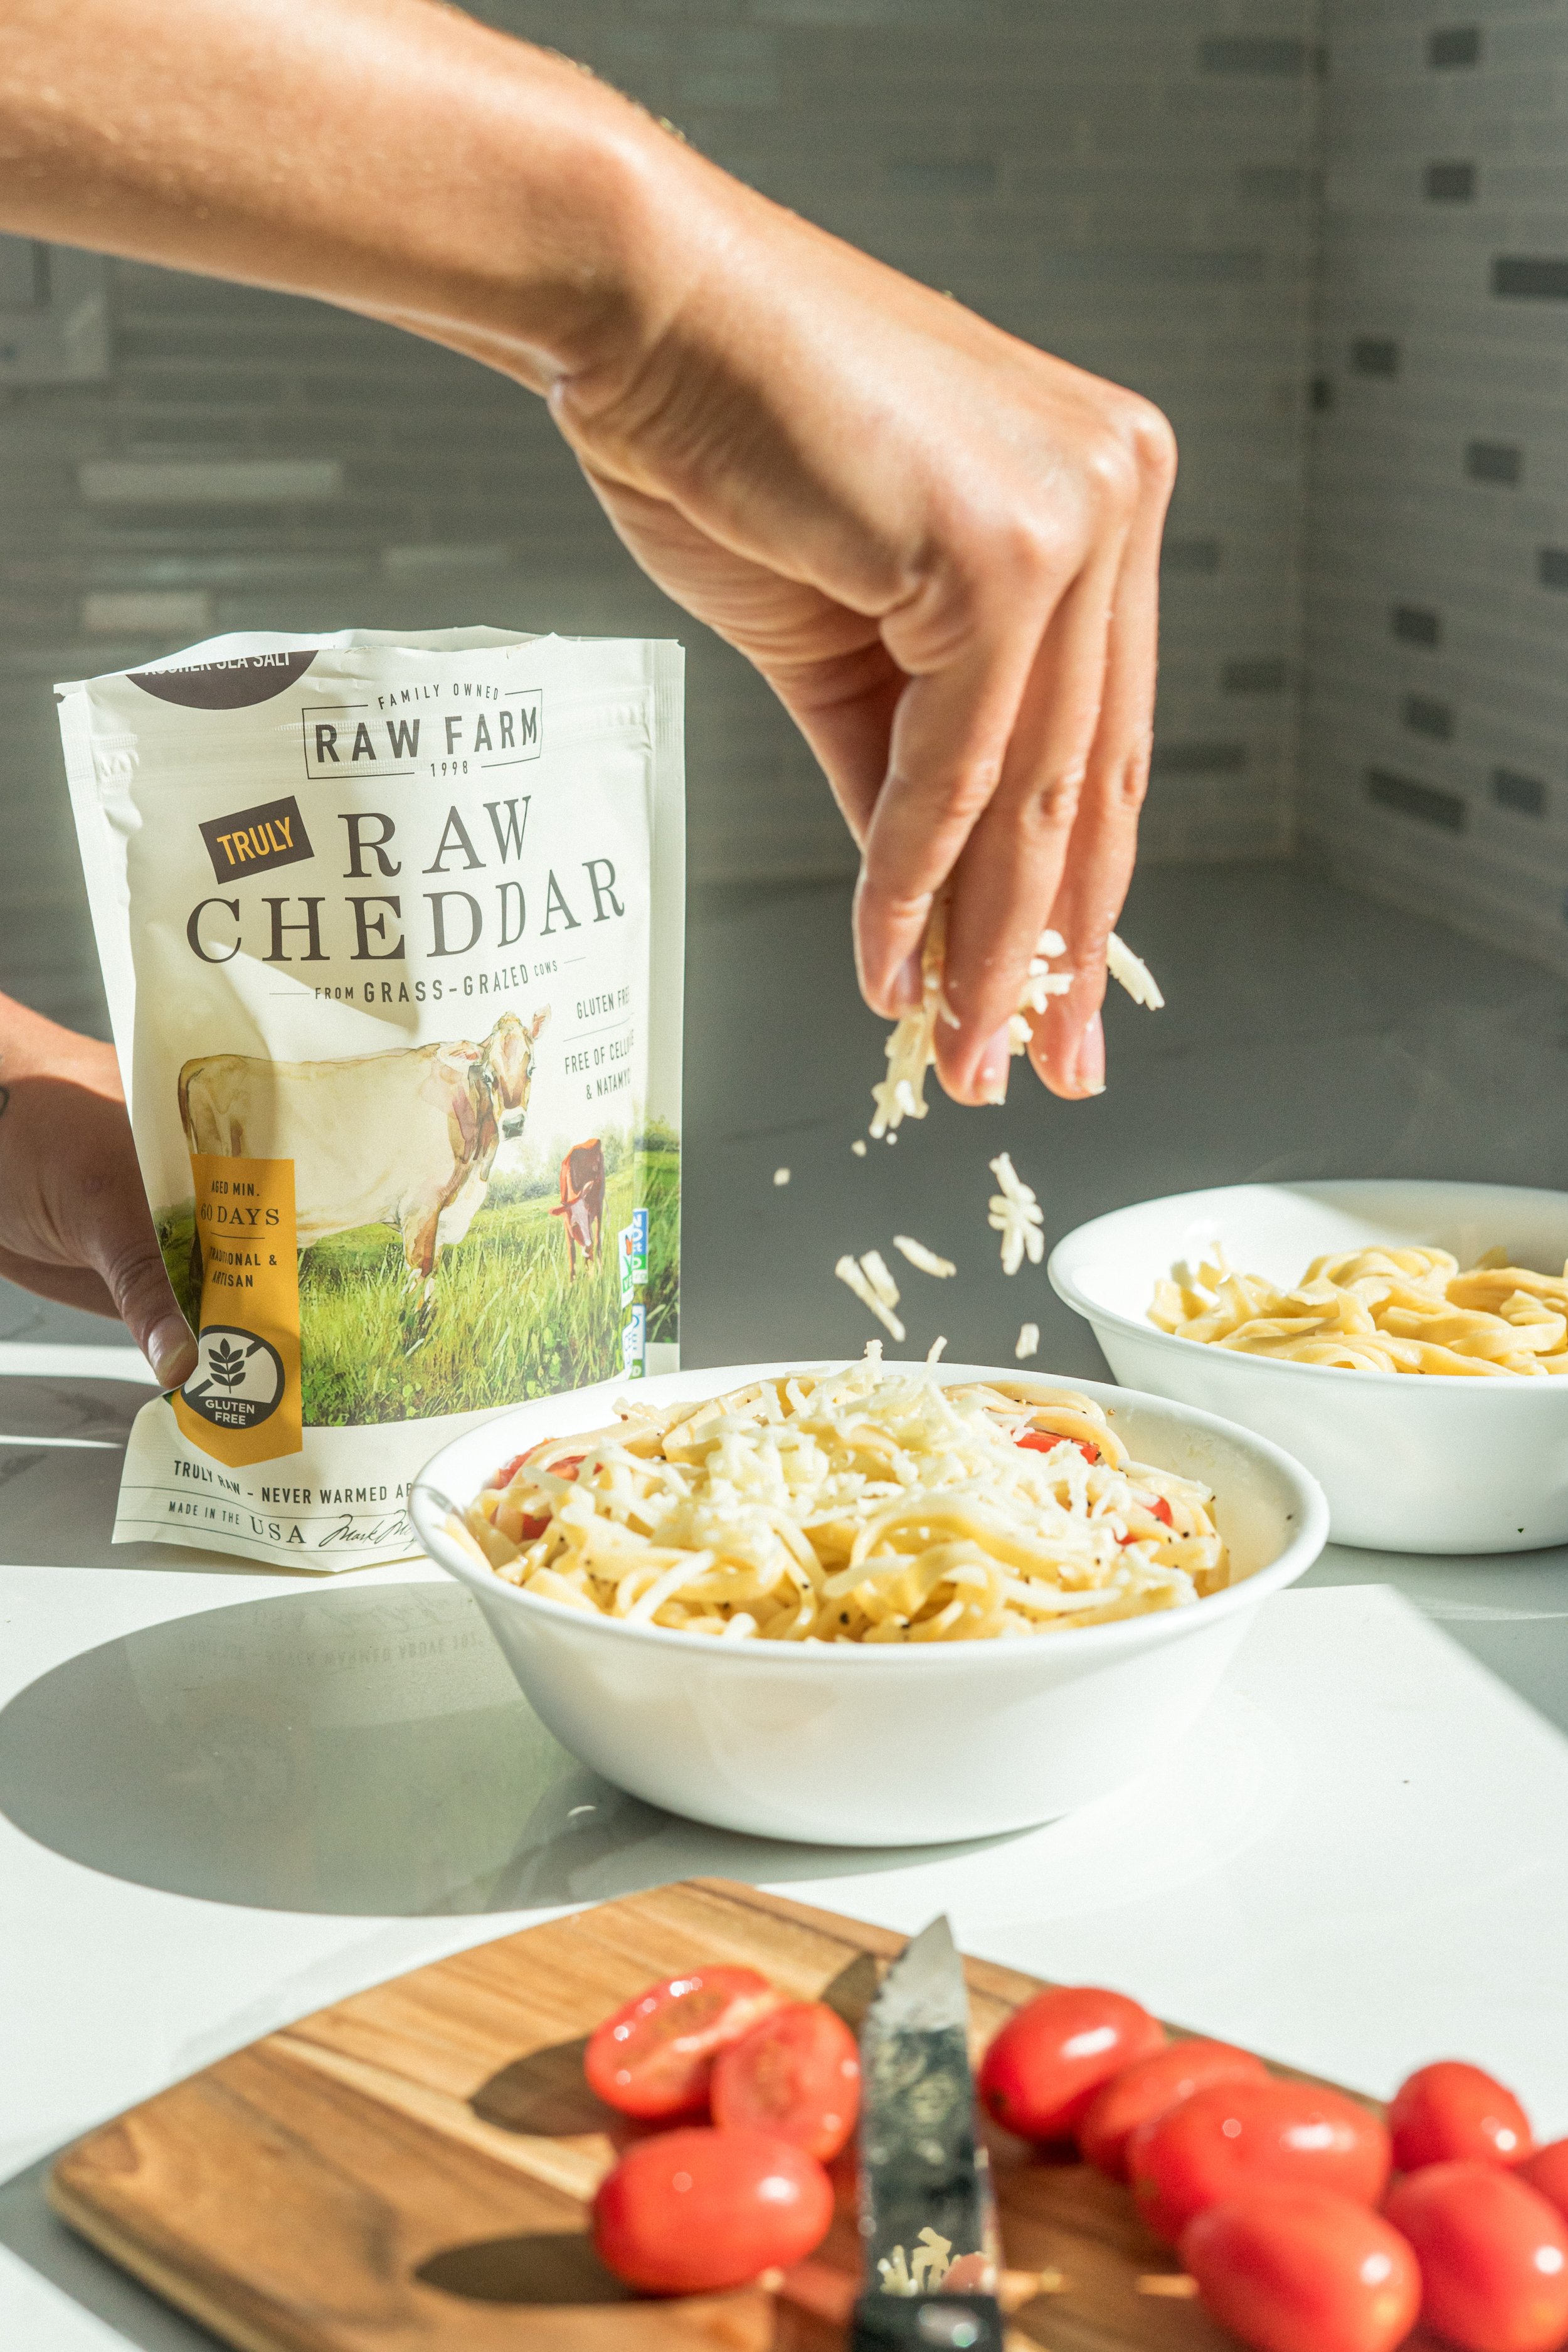 shredded cheddar on pasta.jpg